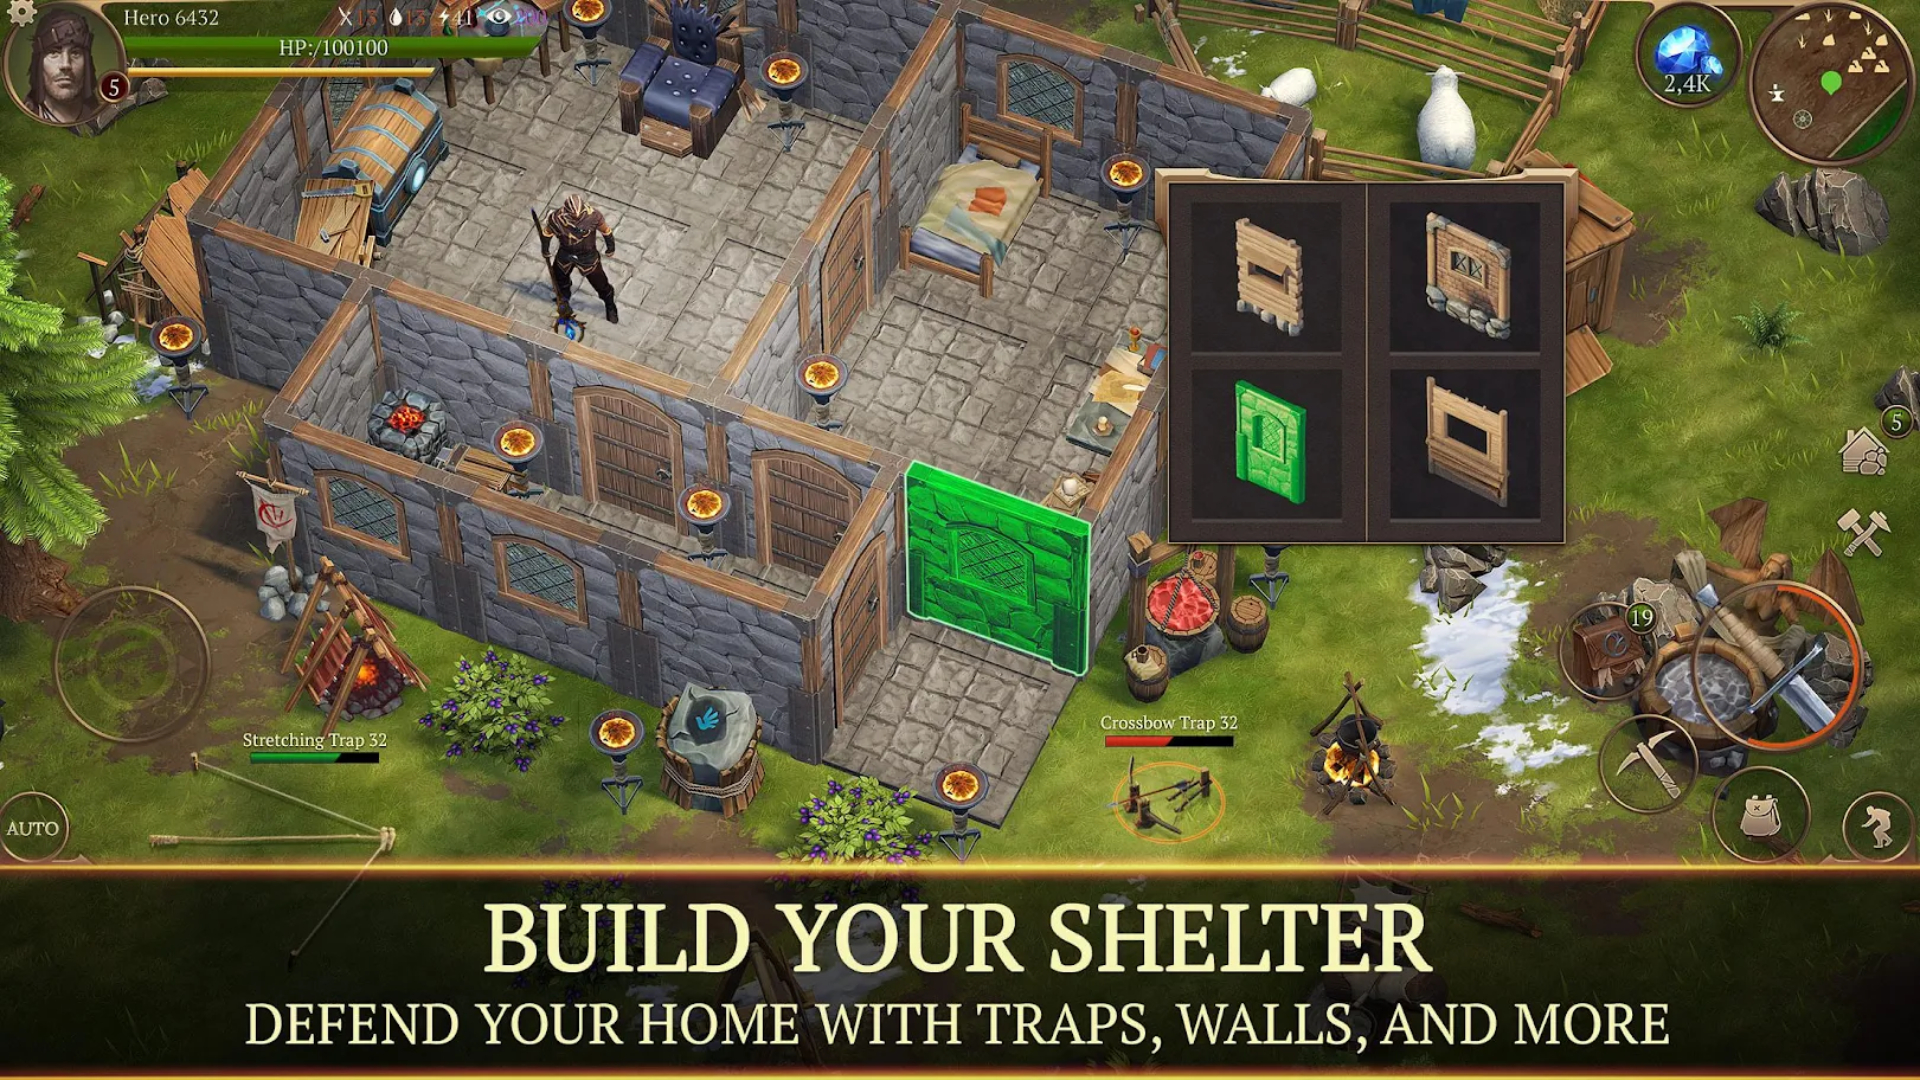 Survival Games Stormfall: ภาพแสดงบ้านที่ถูกโครงสร้าง ข้อความที่ด้านล่างของหน้าจออ่าน